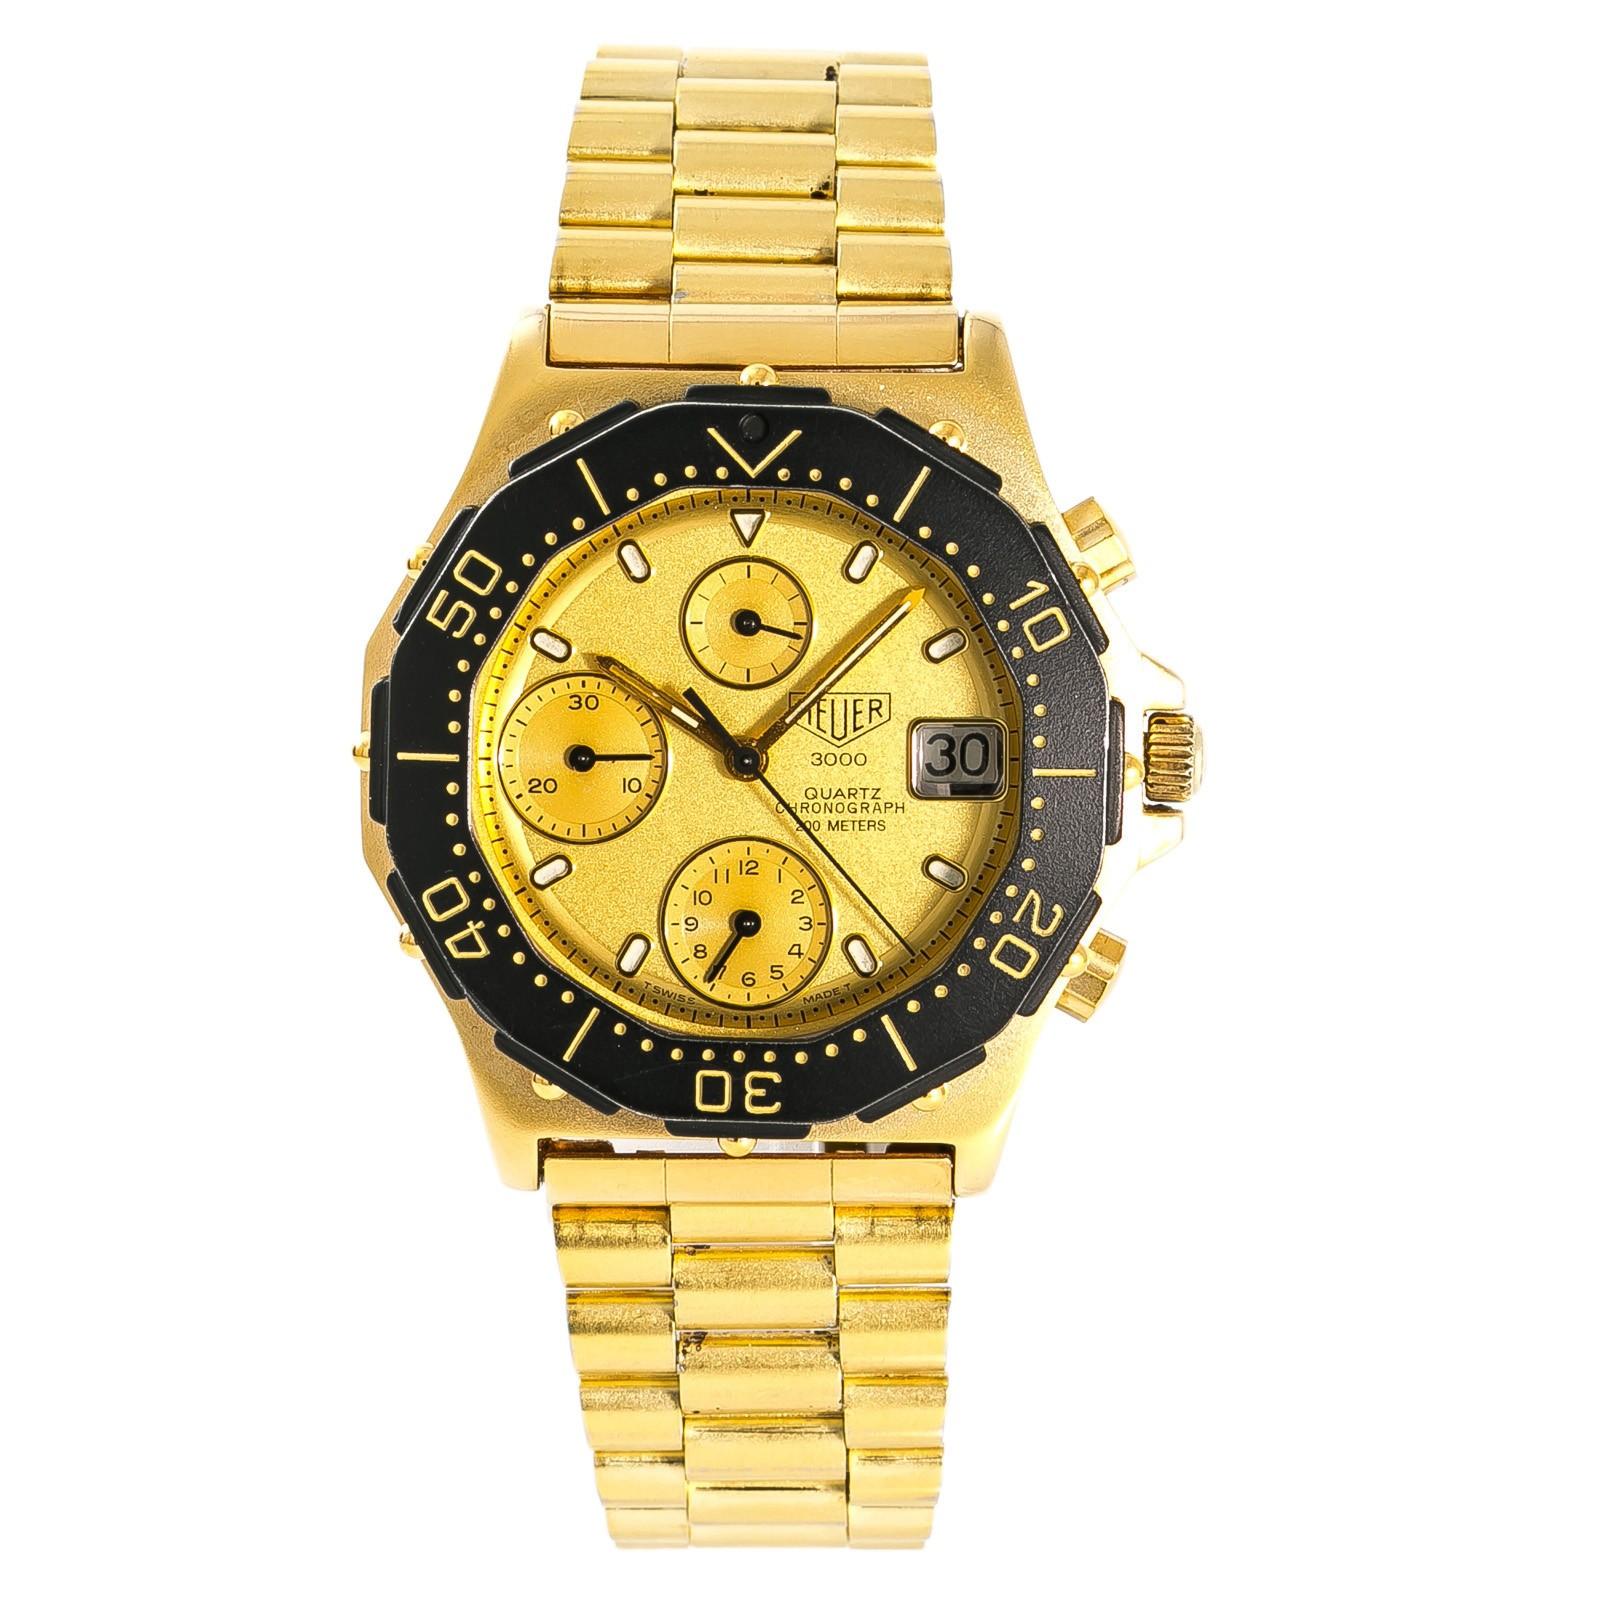 Heuer 3000 Men's Vintage Quartz Watch Chronograph Gold Plated at 